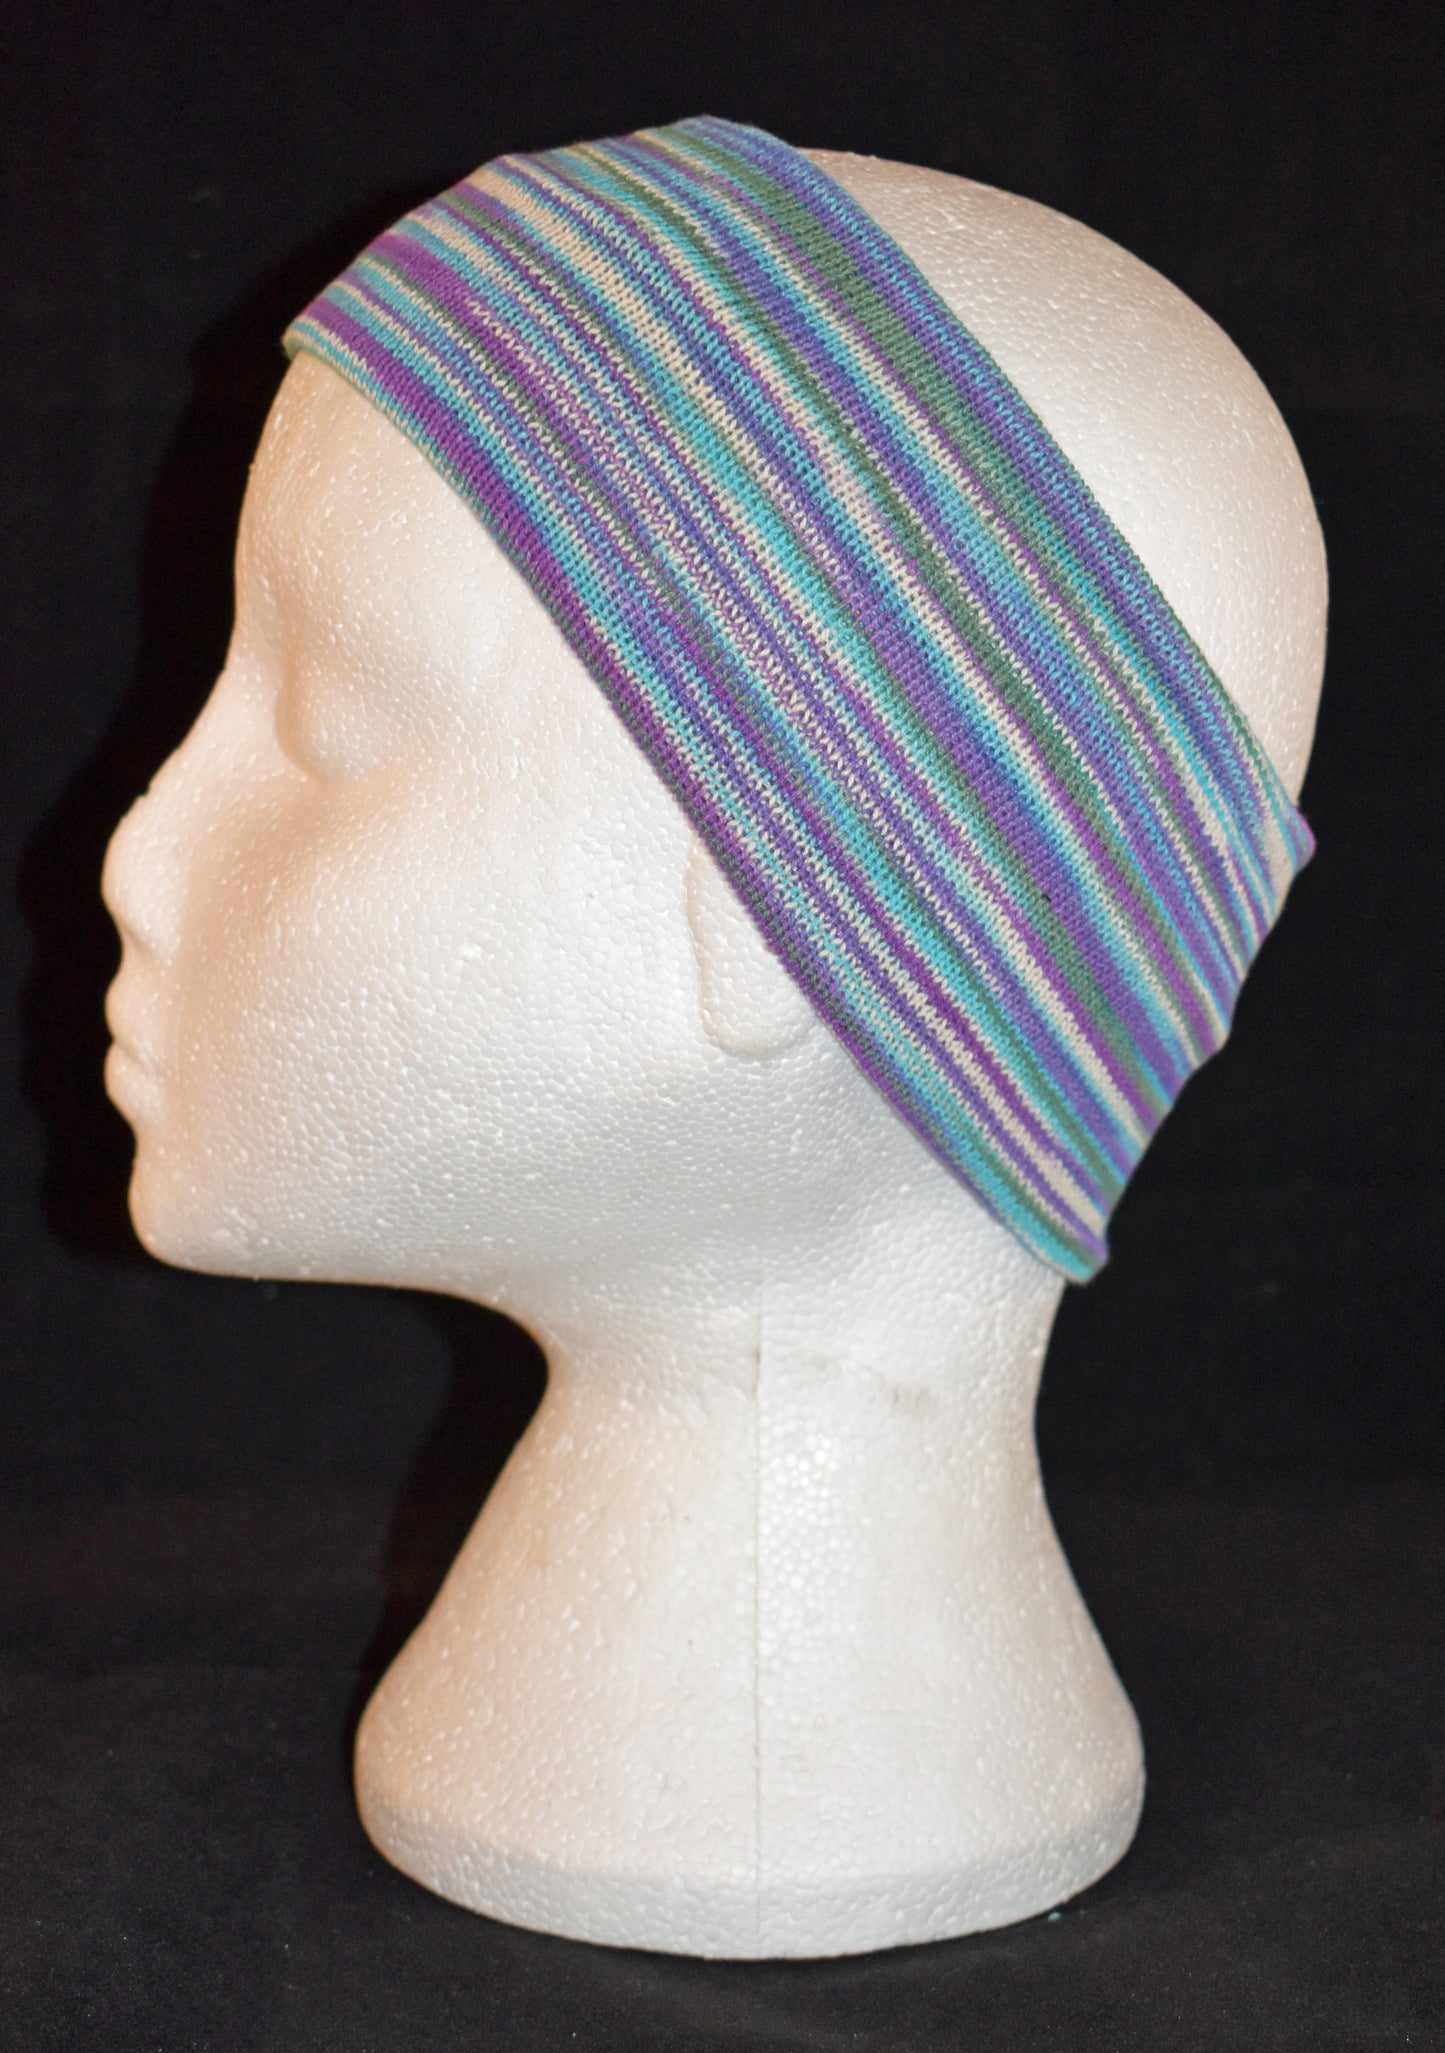 Striped Cotton Hair Band